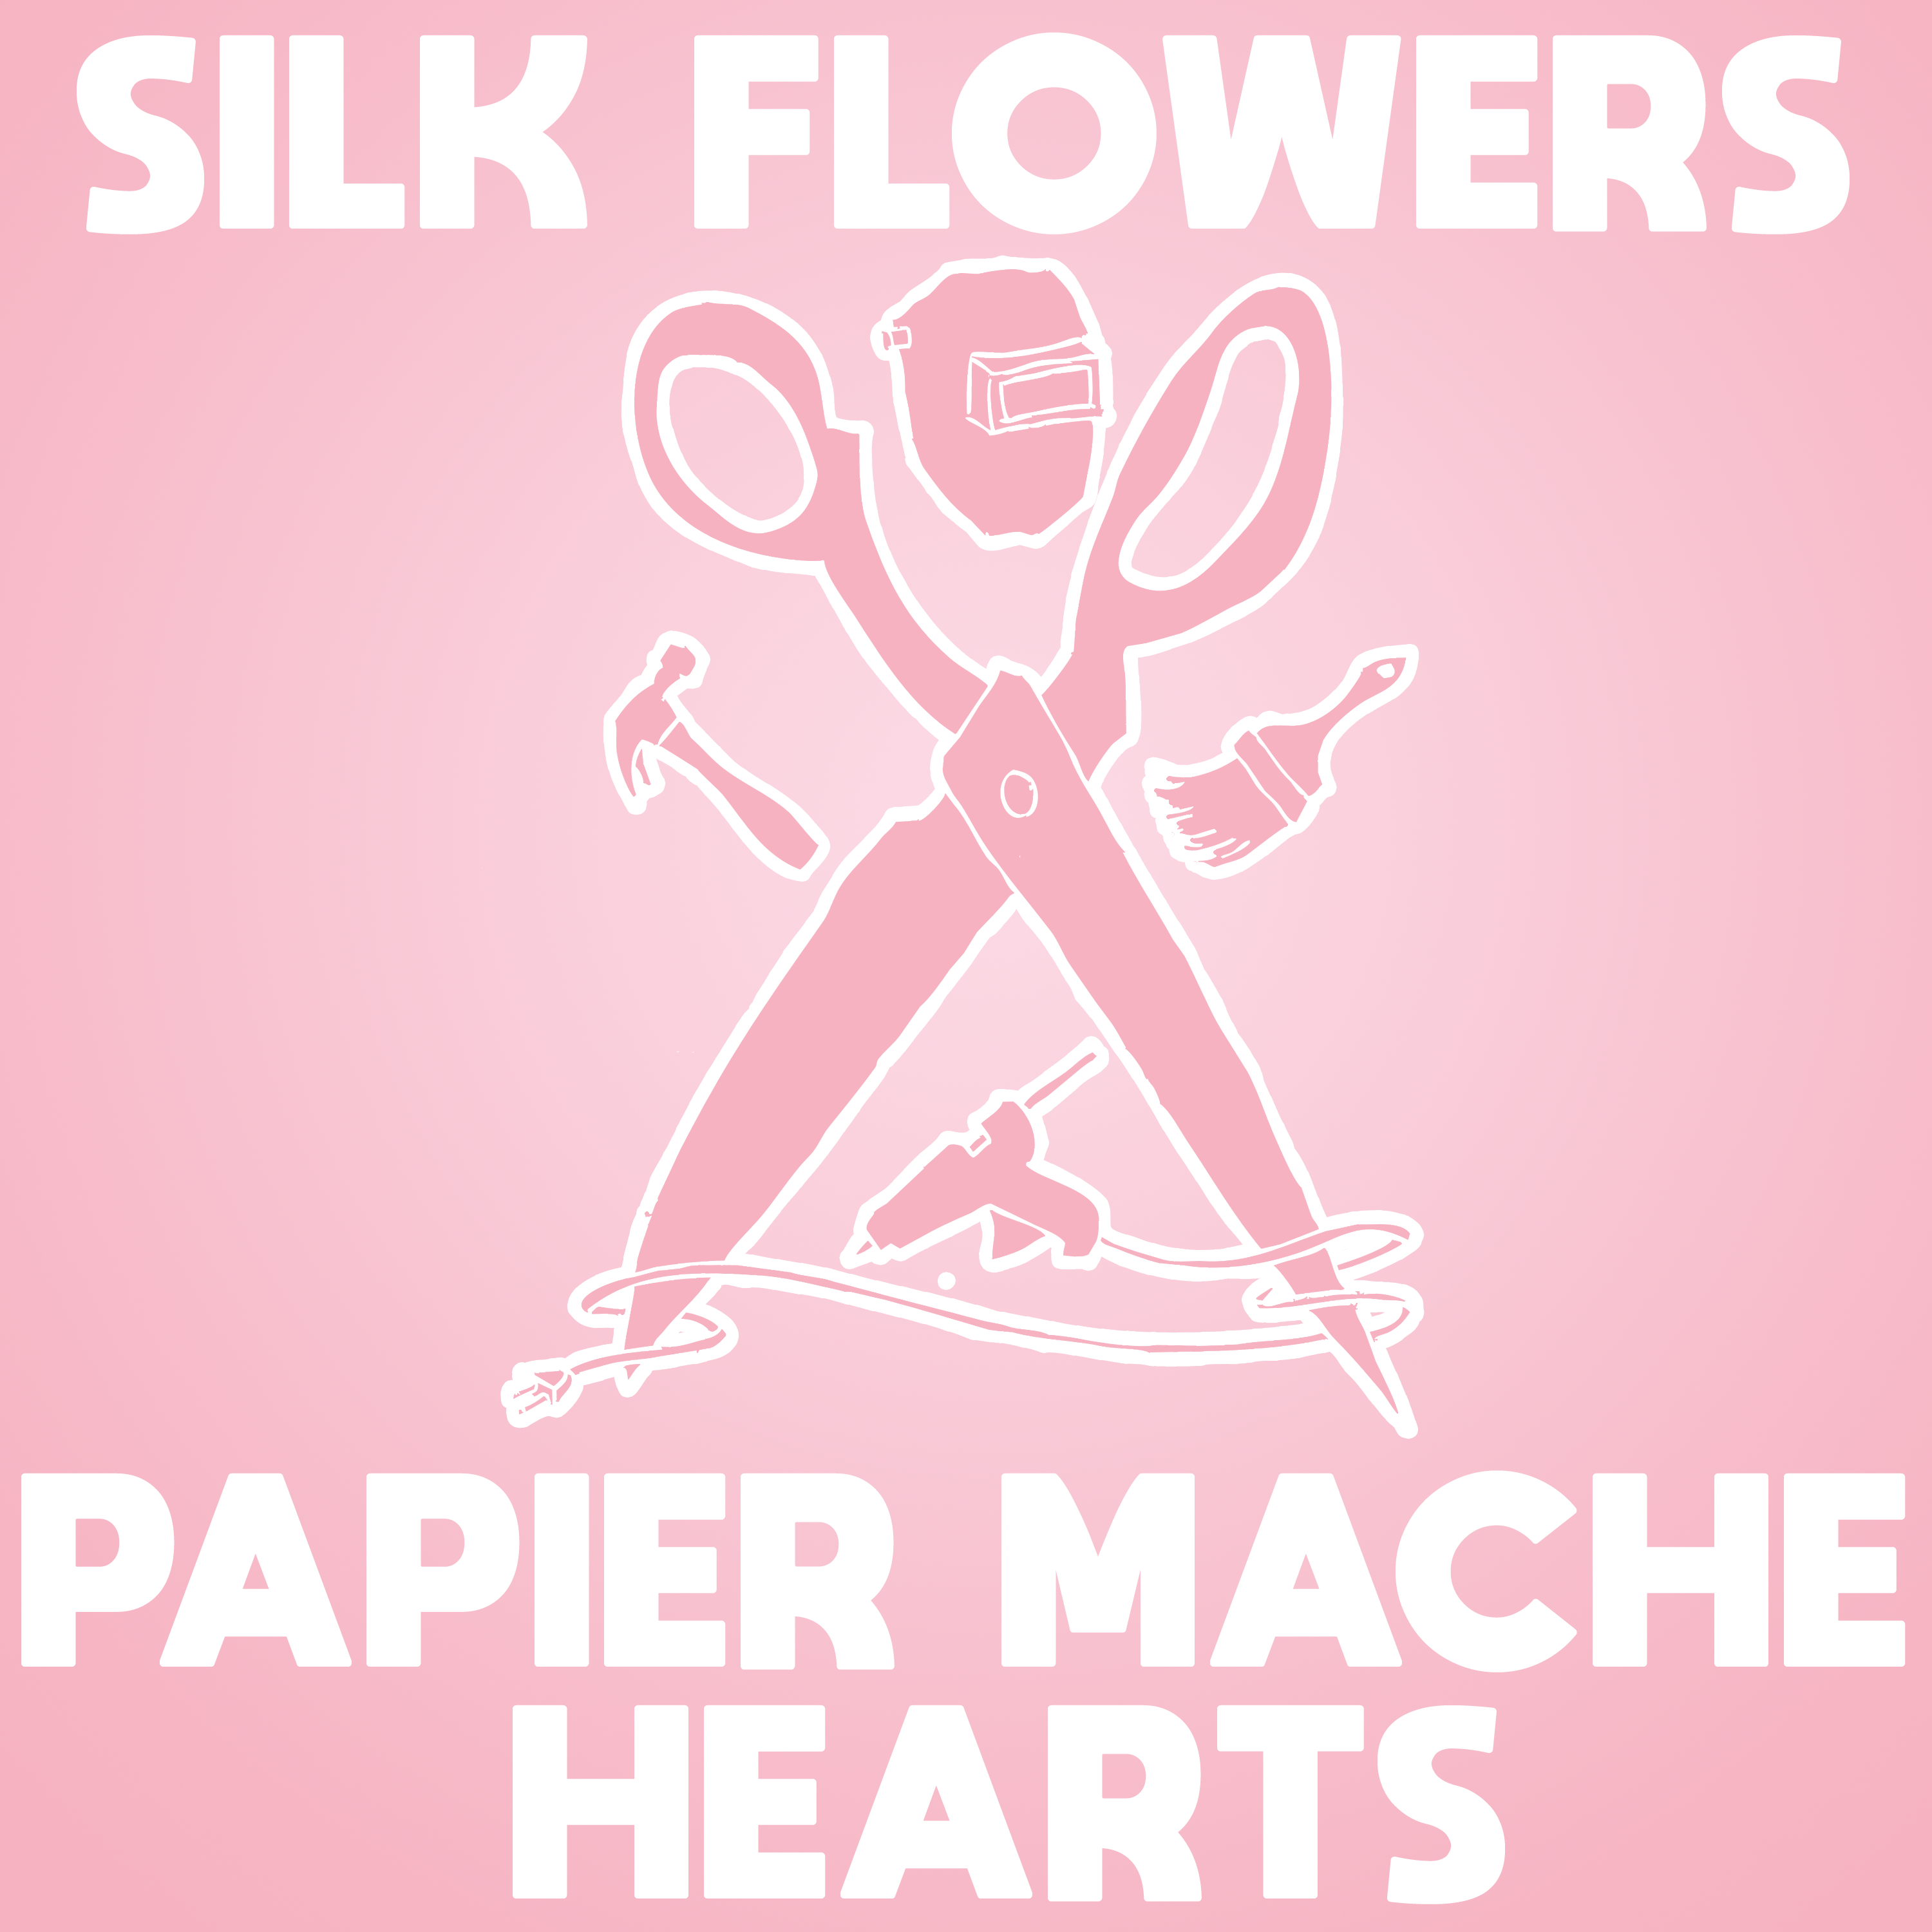 Silk Flowers and Papier Mache Hearts